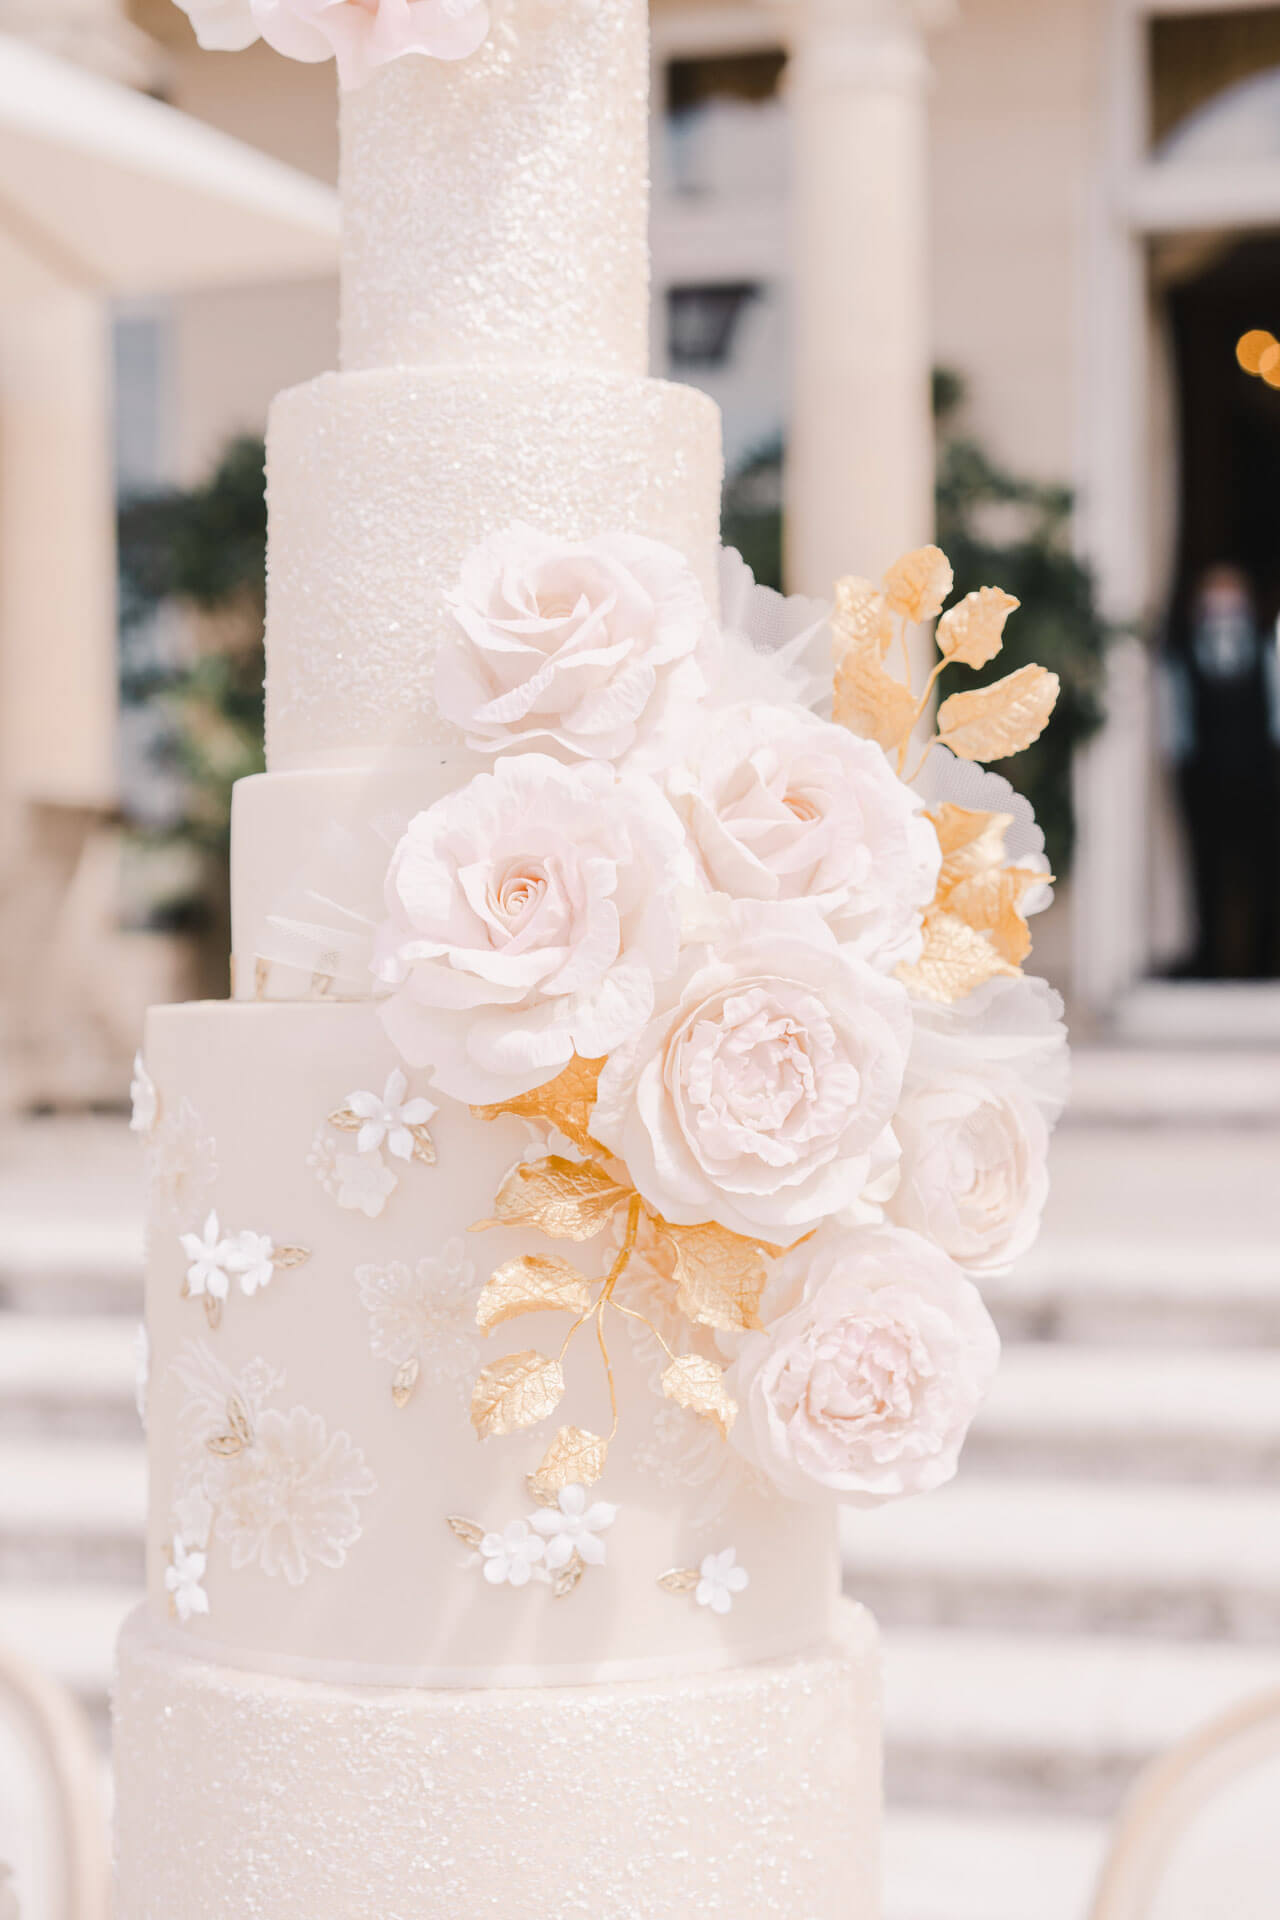 One of Kind Wedding Cakes By Yevnig Brigitte Beaverbrook DavidCPhotography LUXUS